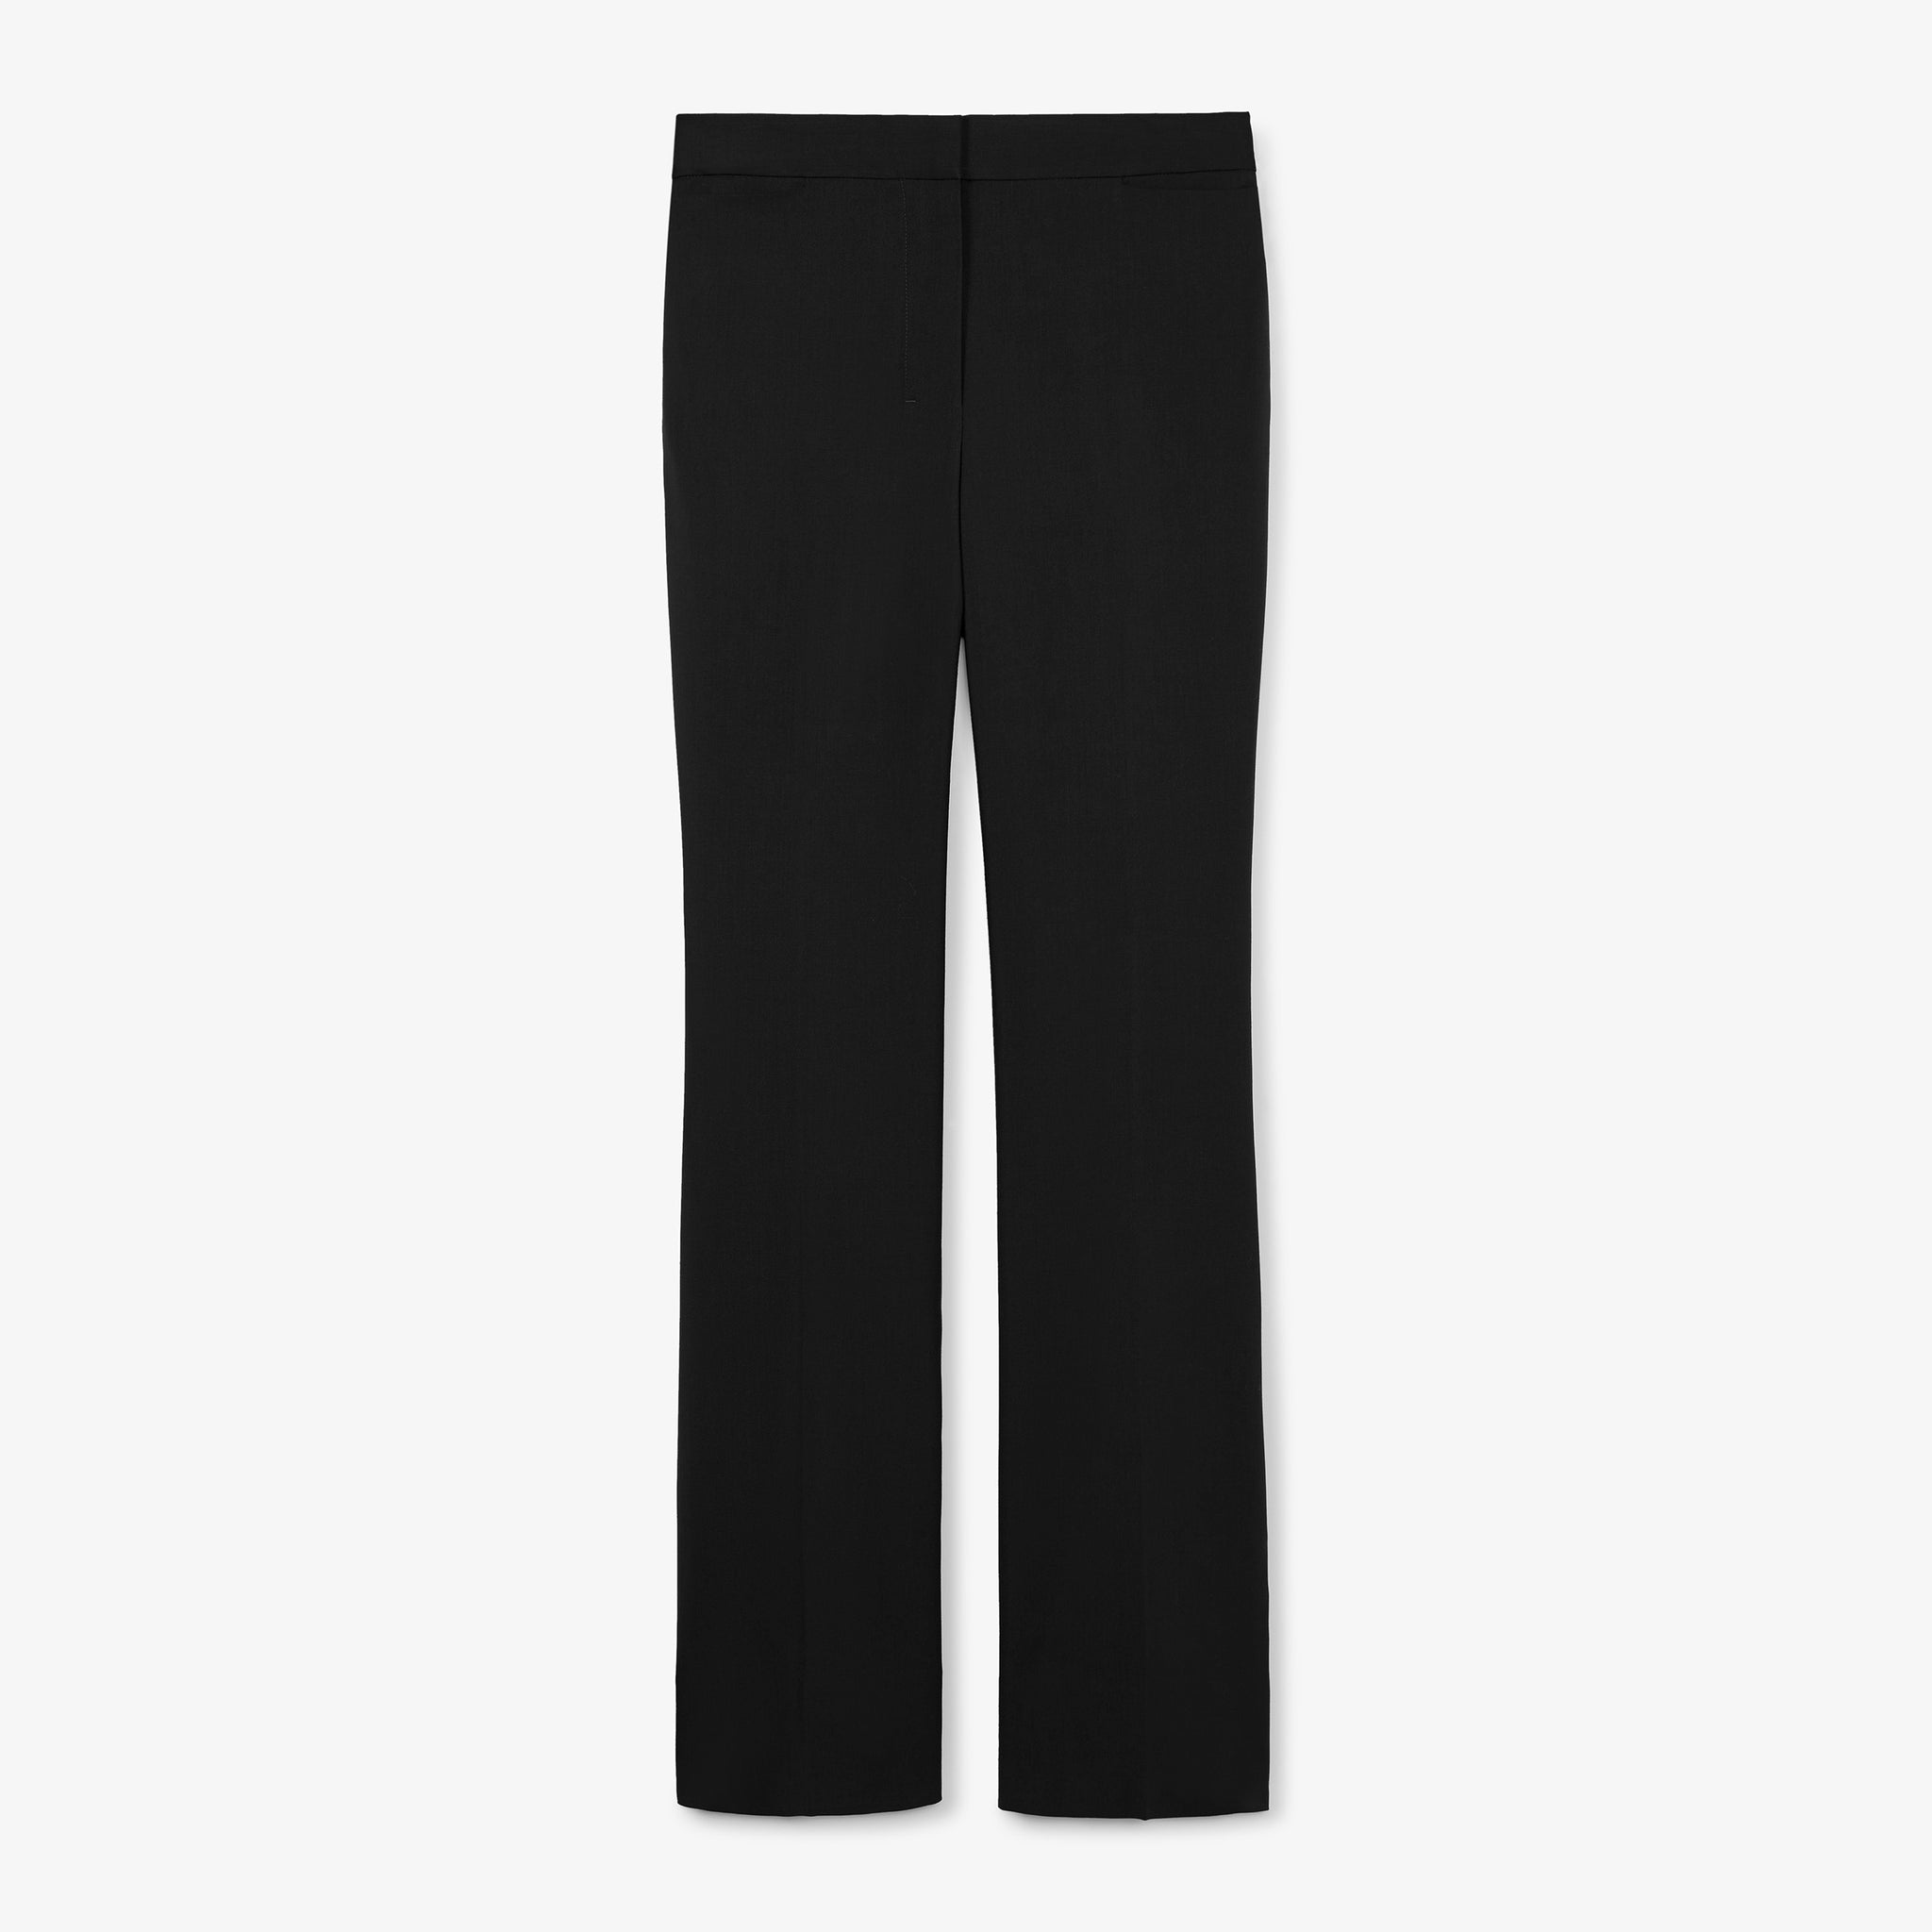 Black Bottoms for Women – Buy Black Pants or Trousers for Girls